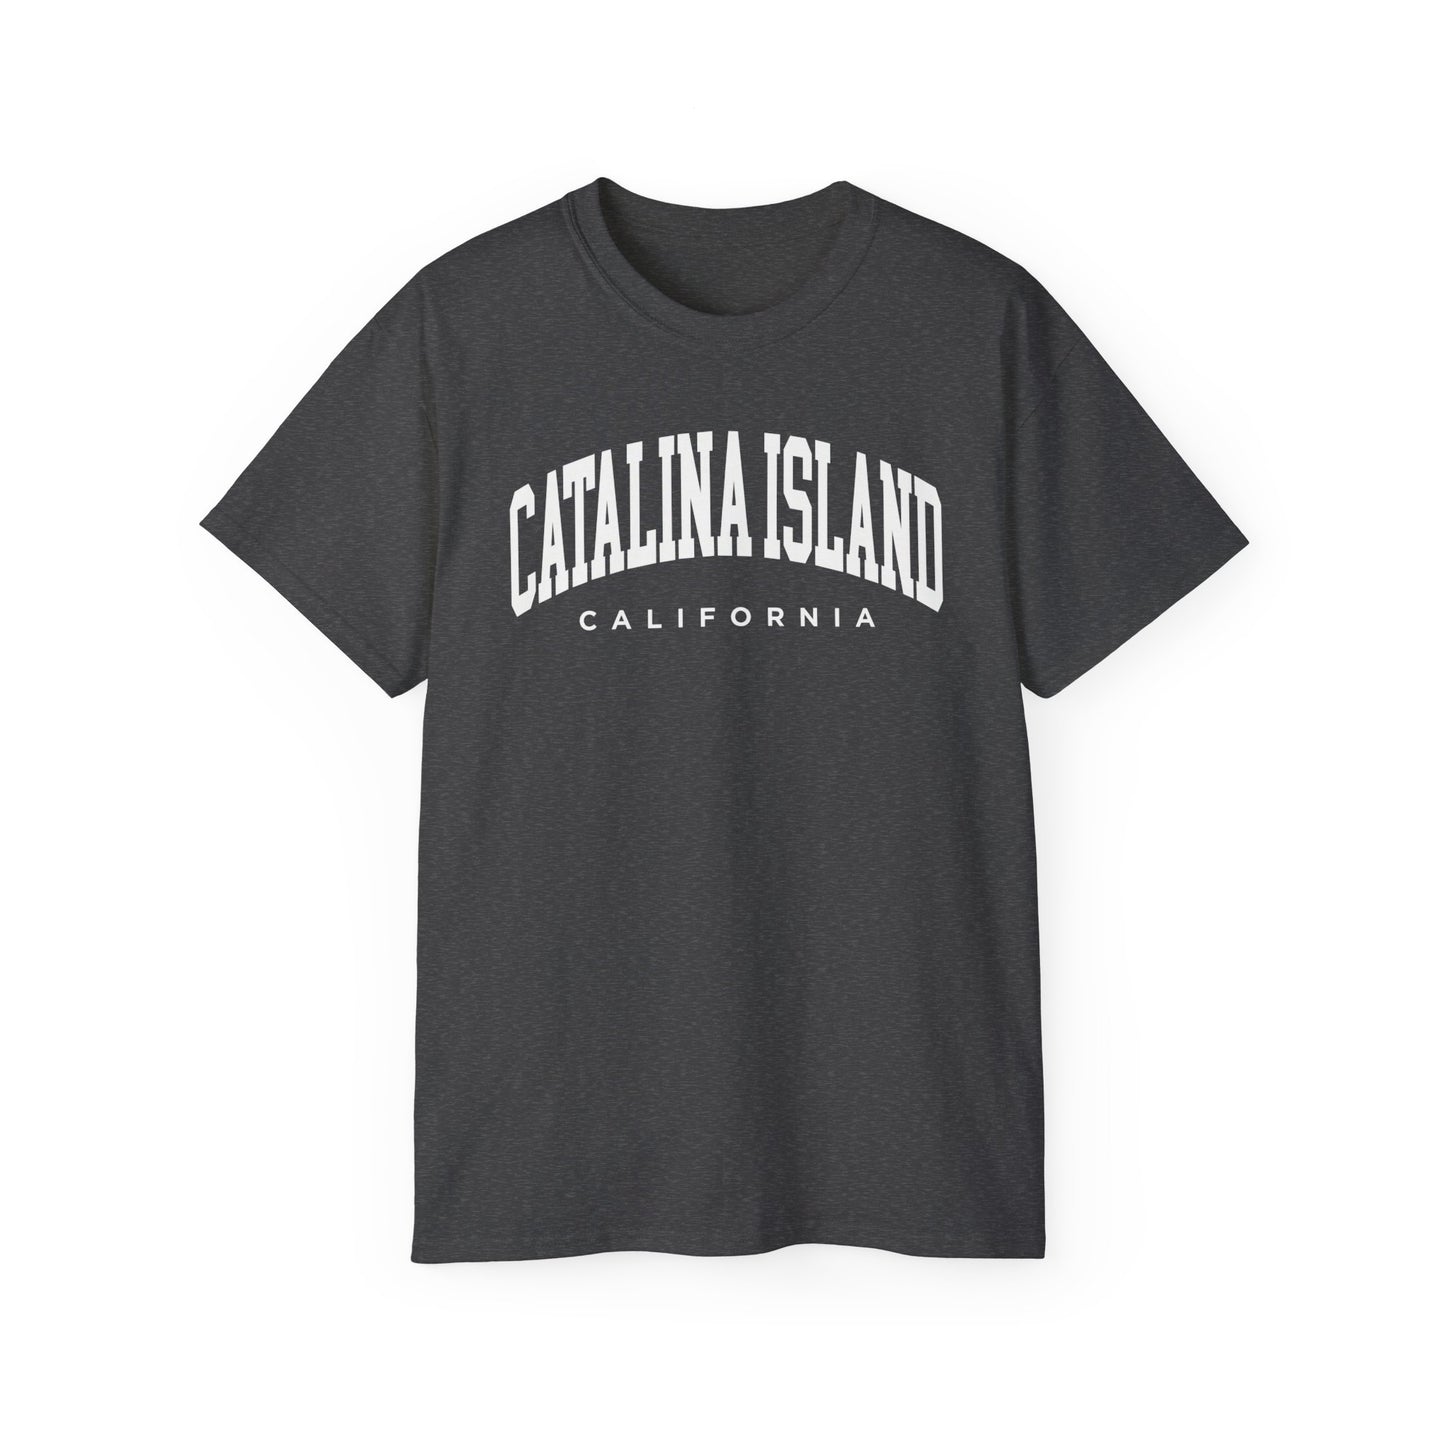 Catalina Island California Tee